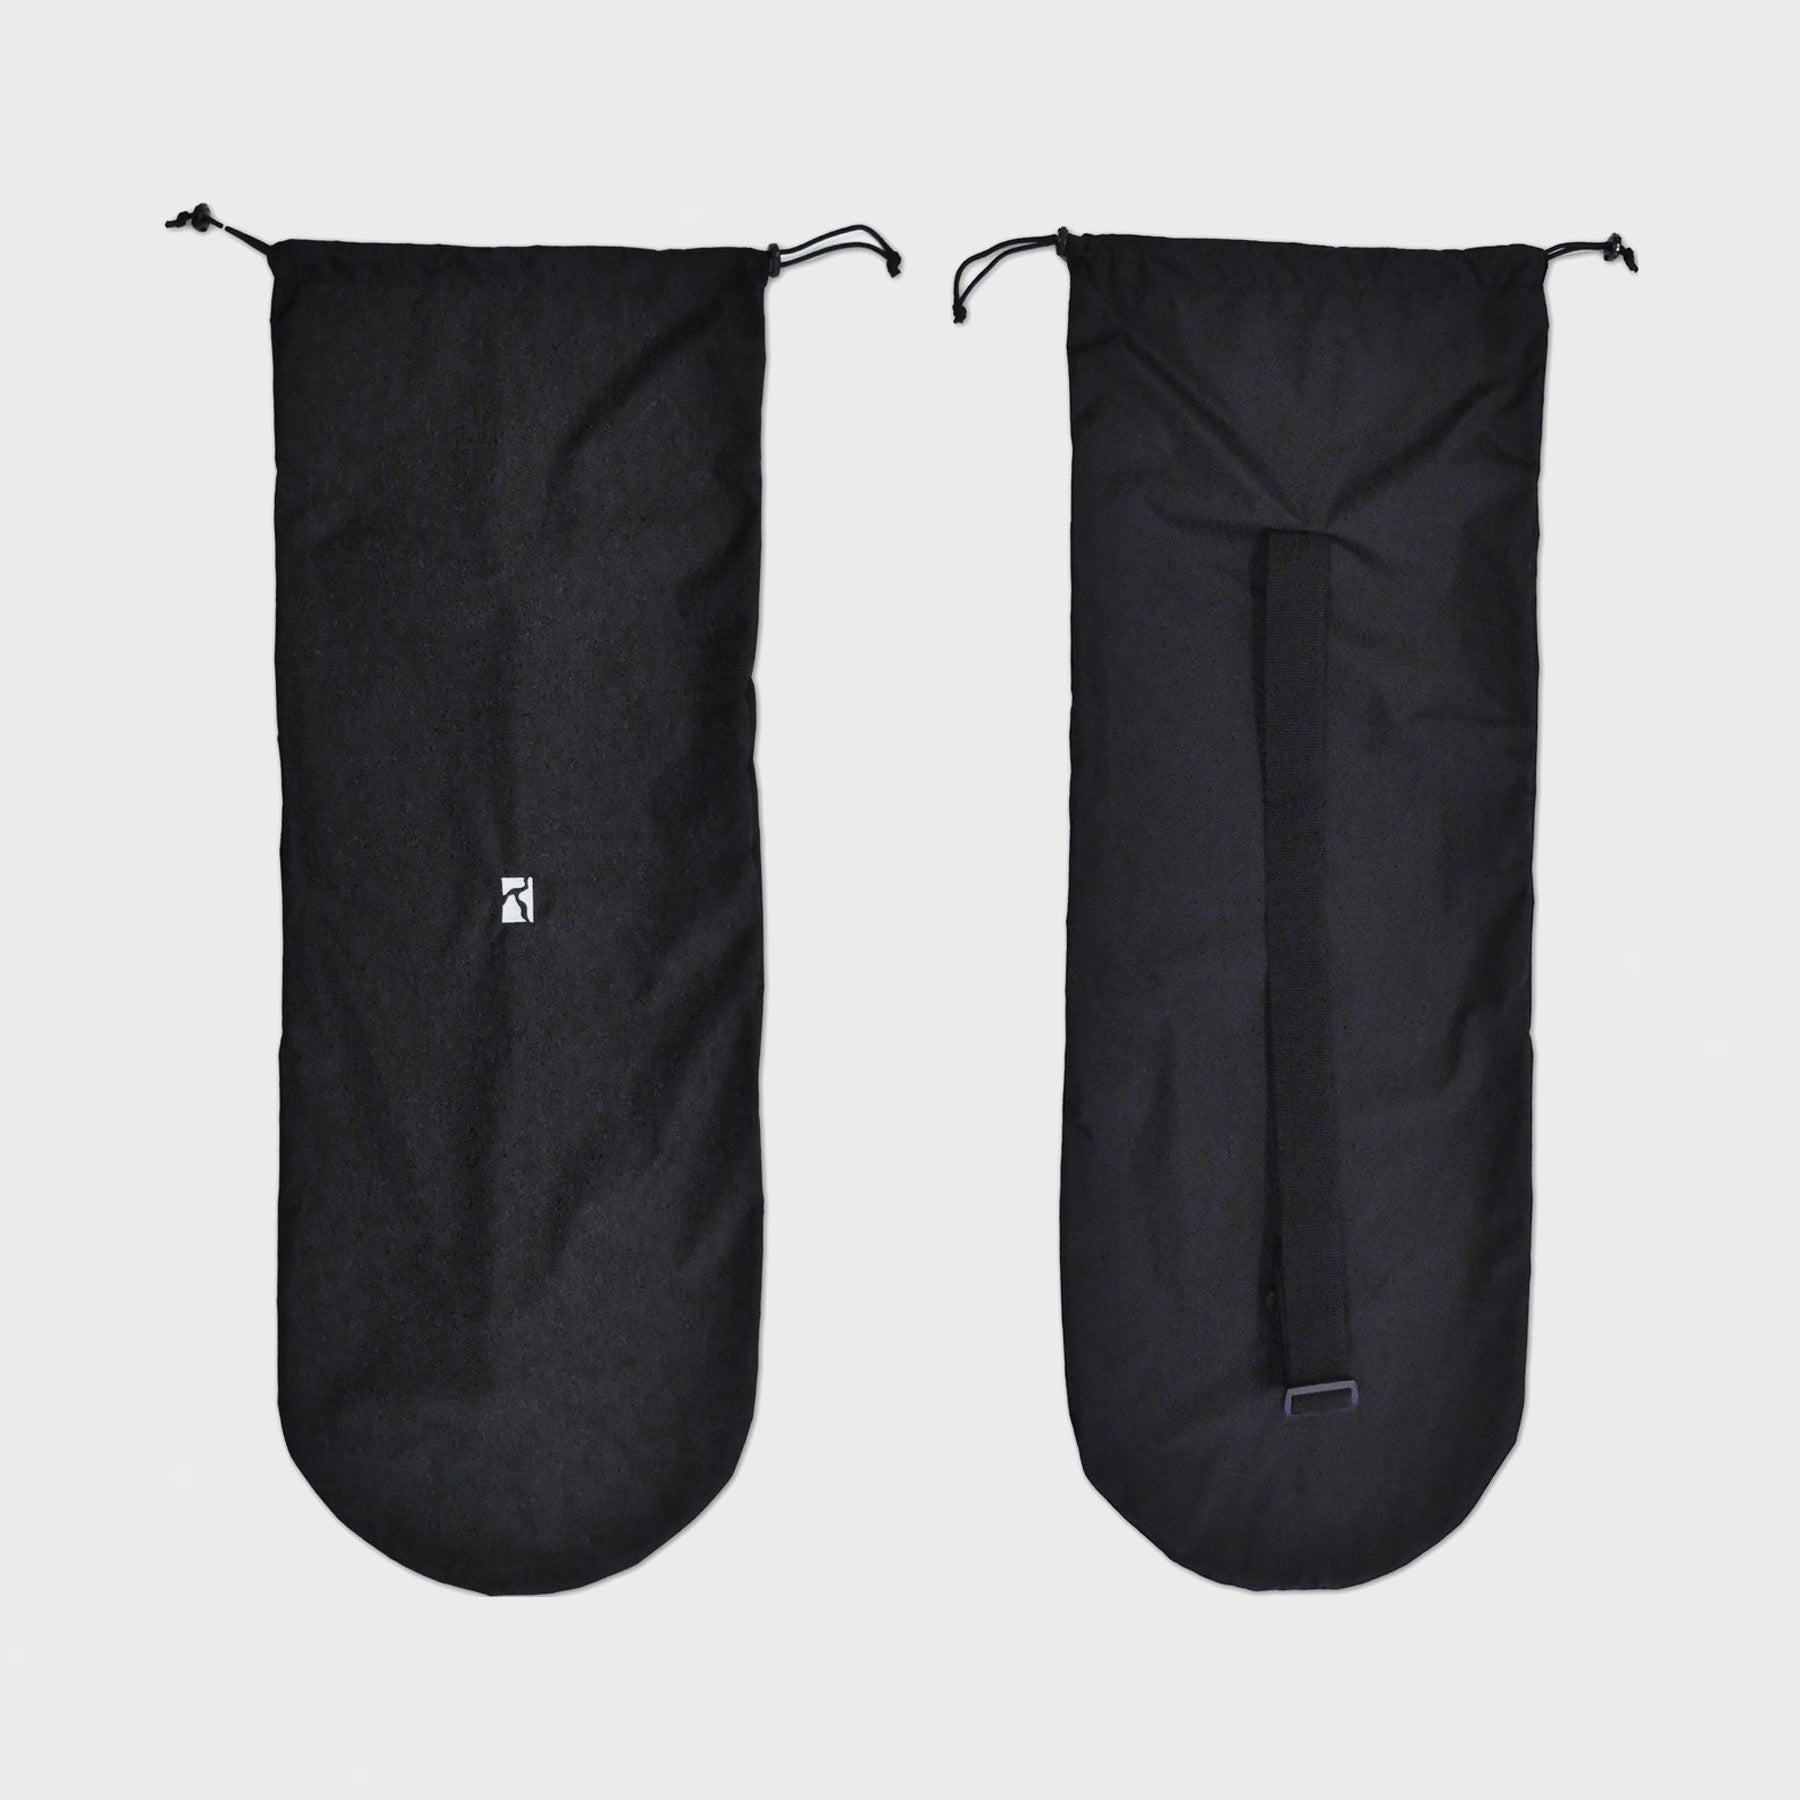 Poetic Collective - Skate Bag - Black